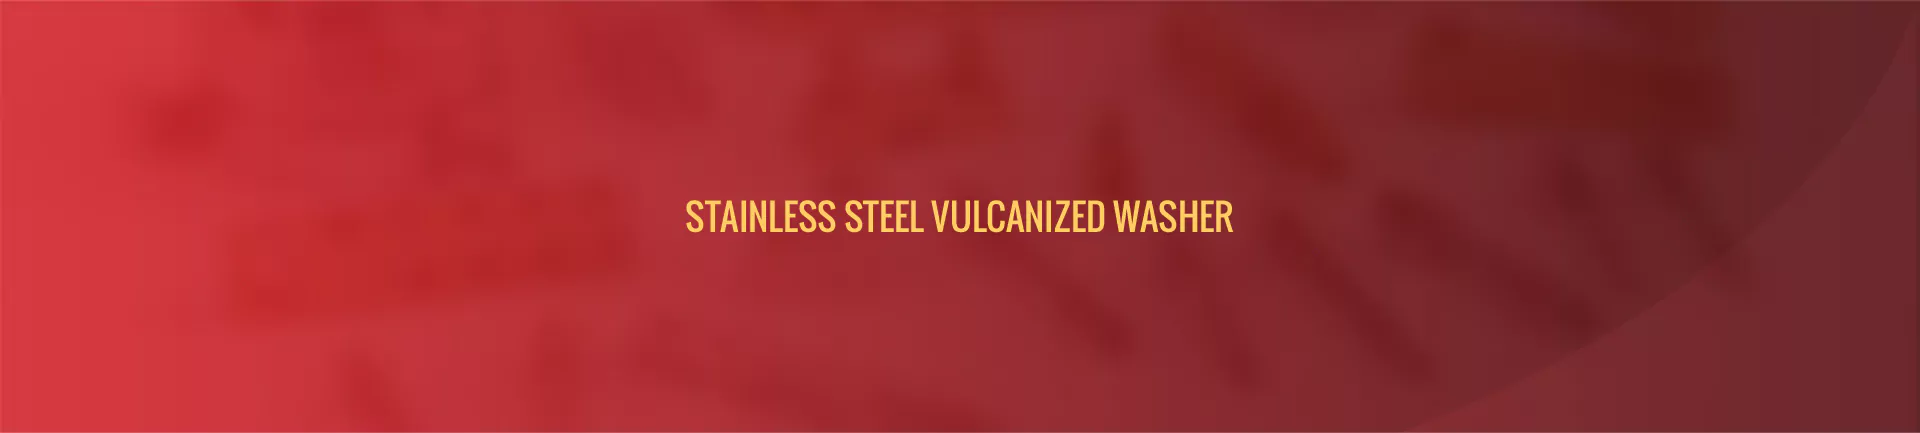 stainless-steel-vulcanized-washer-banner